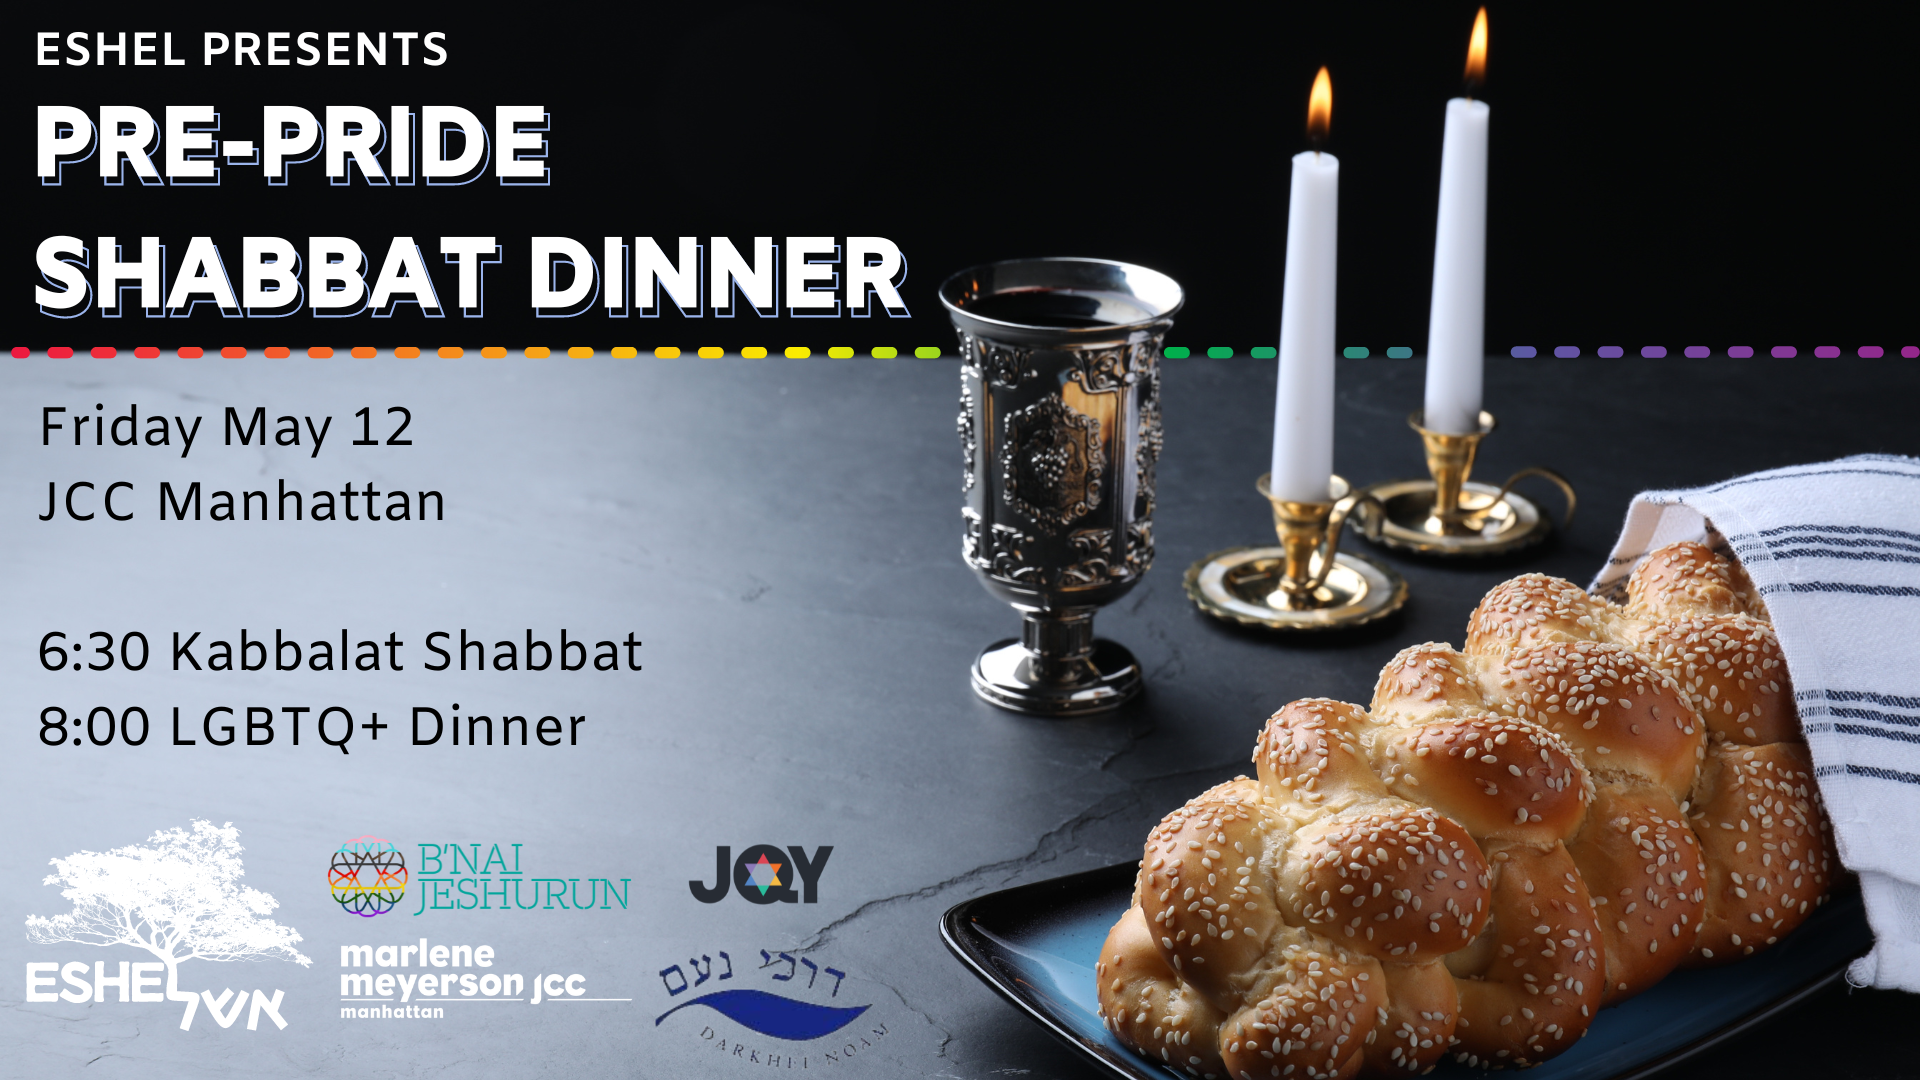 PRE-PRIDE SHABBAT DINNER Friday May 12 JCC Manhattan 6:30 Kabbalat Shabbat 8:00 LGBTQ+ Dinner. logos for eshel, B'nai Jeshurum, JQY, Darchei Noam